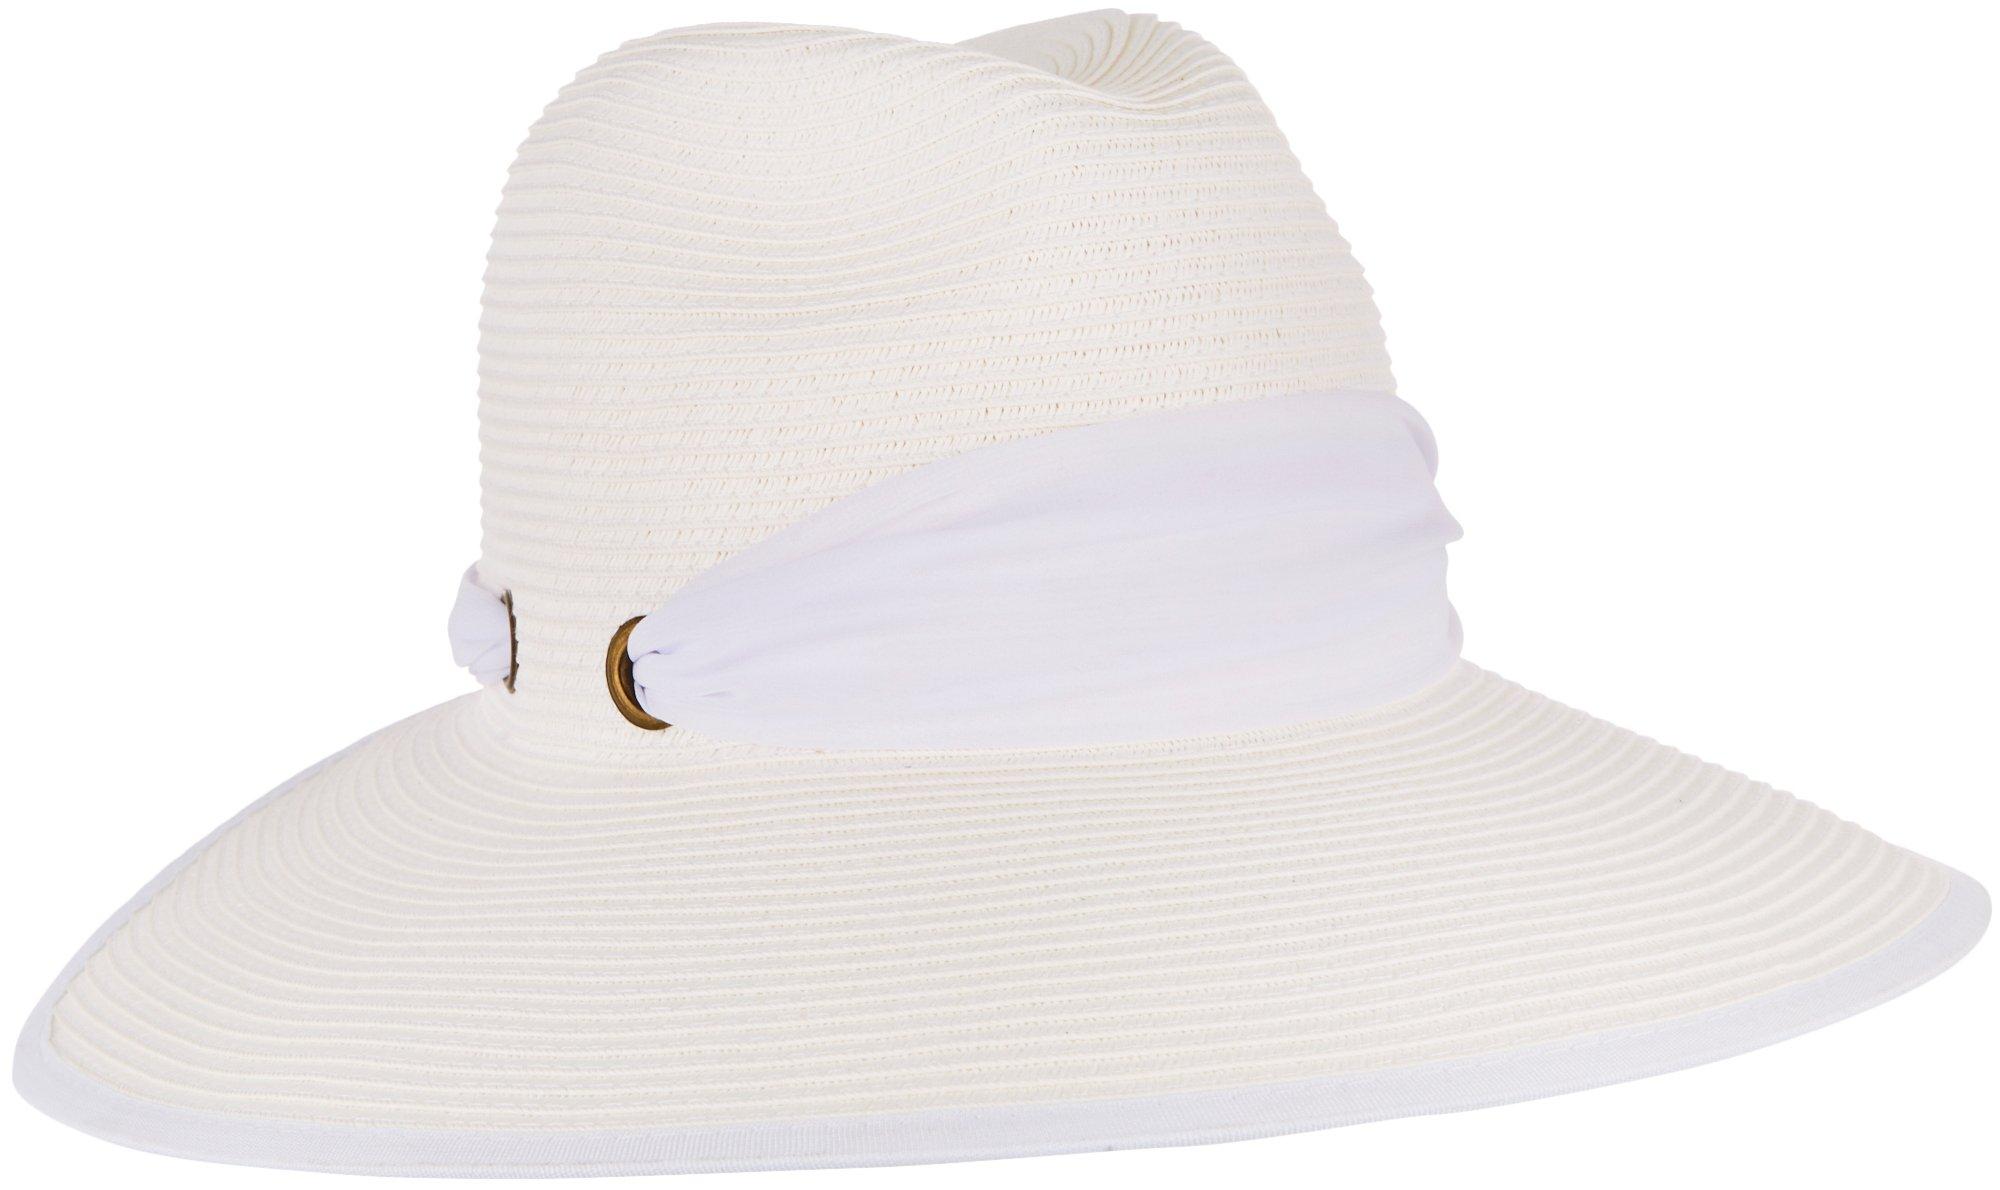 Women's Woven Sun Hat